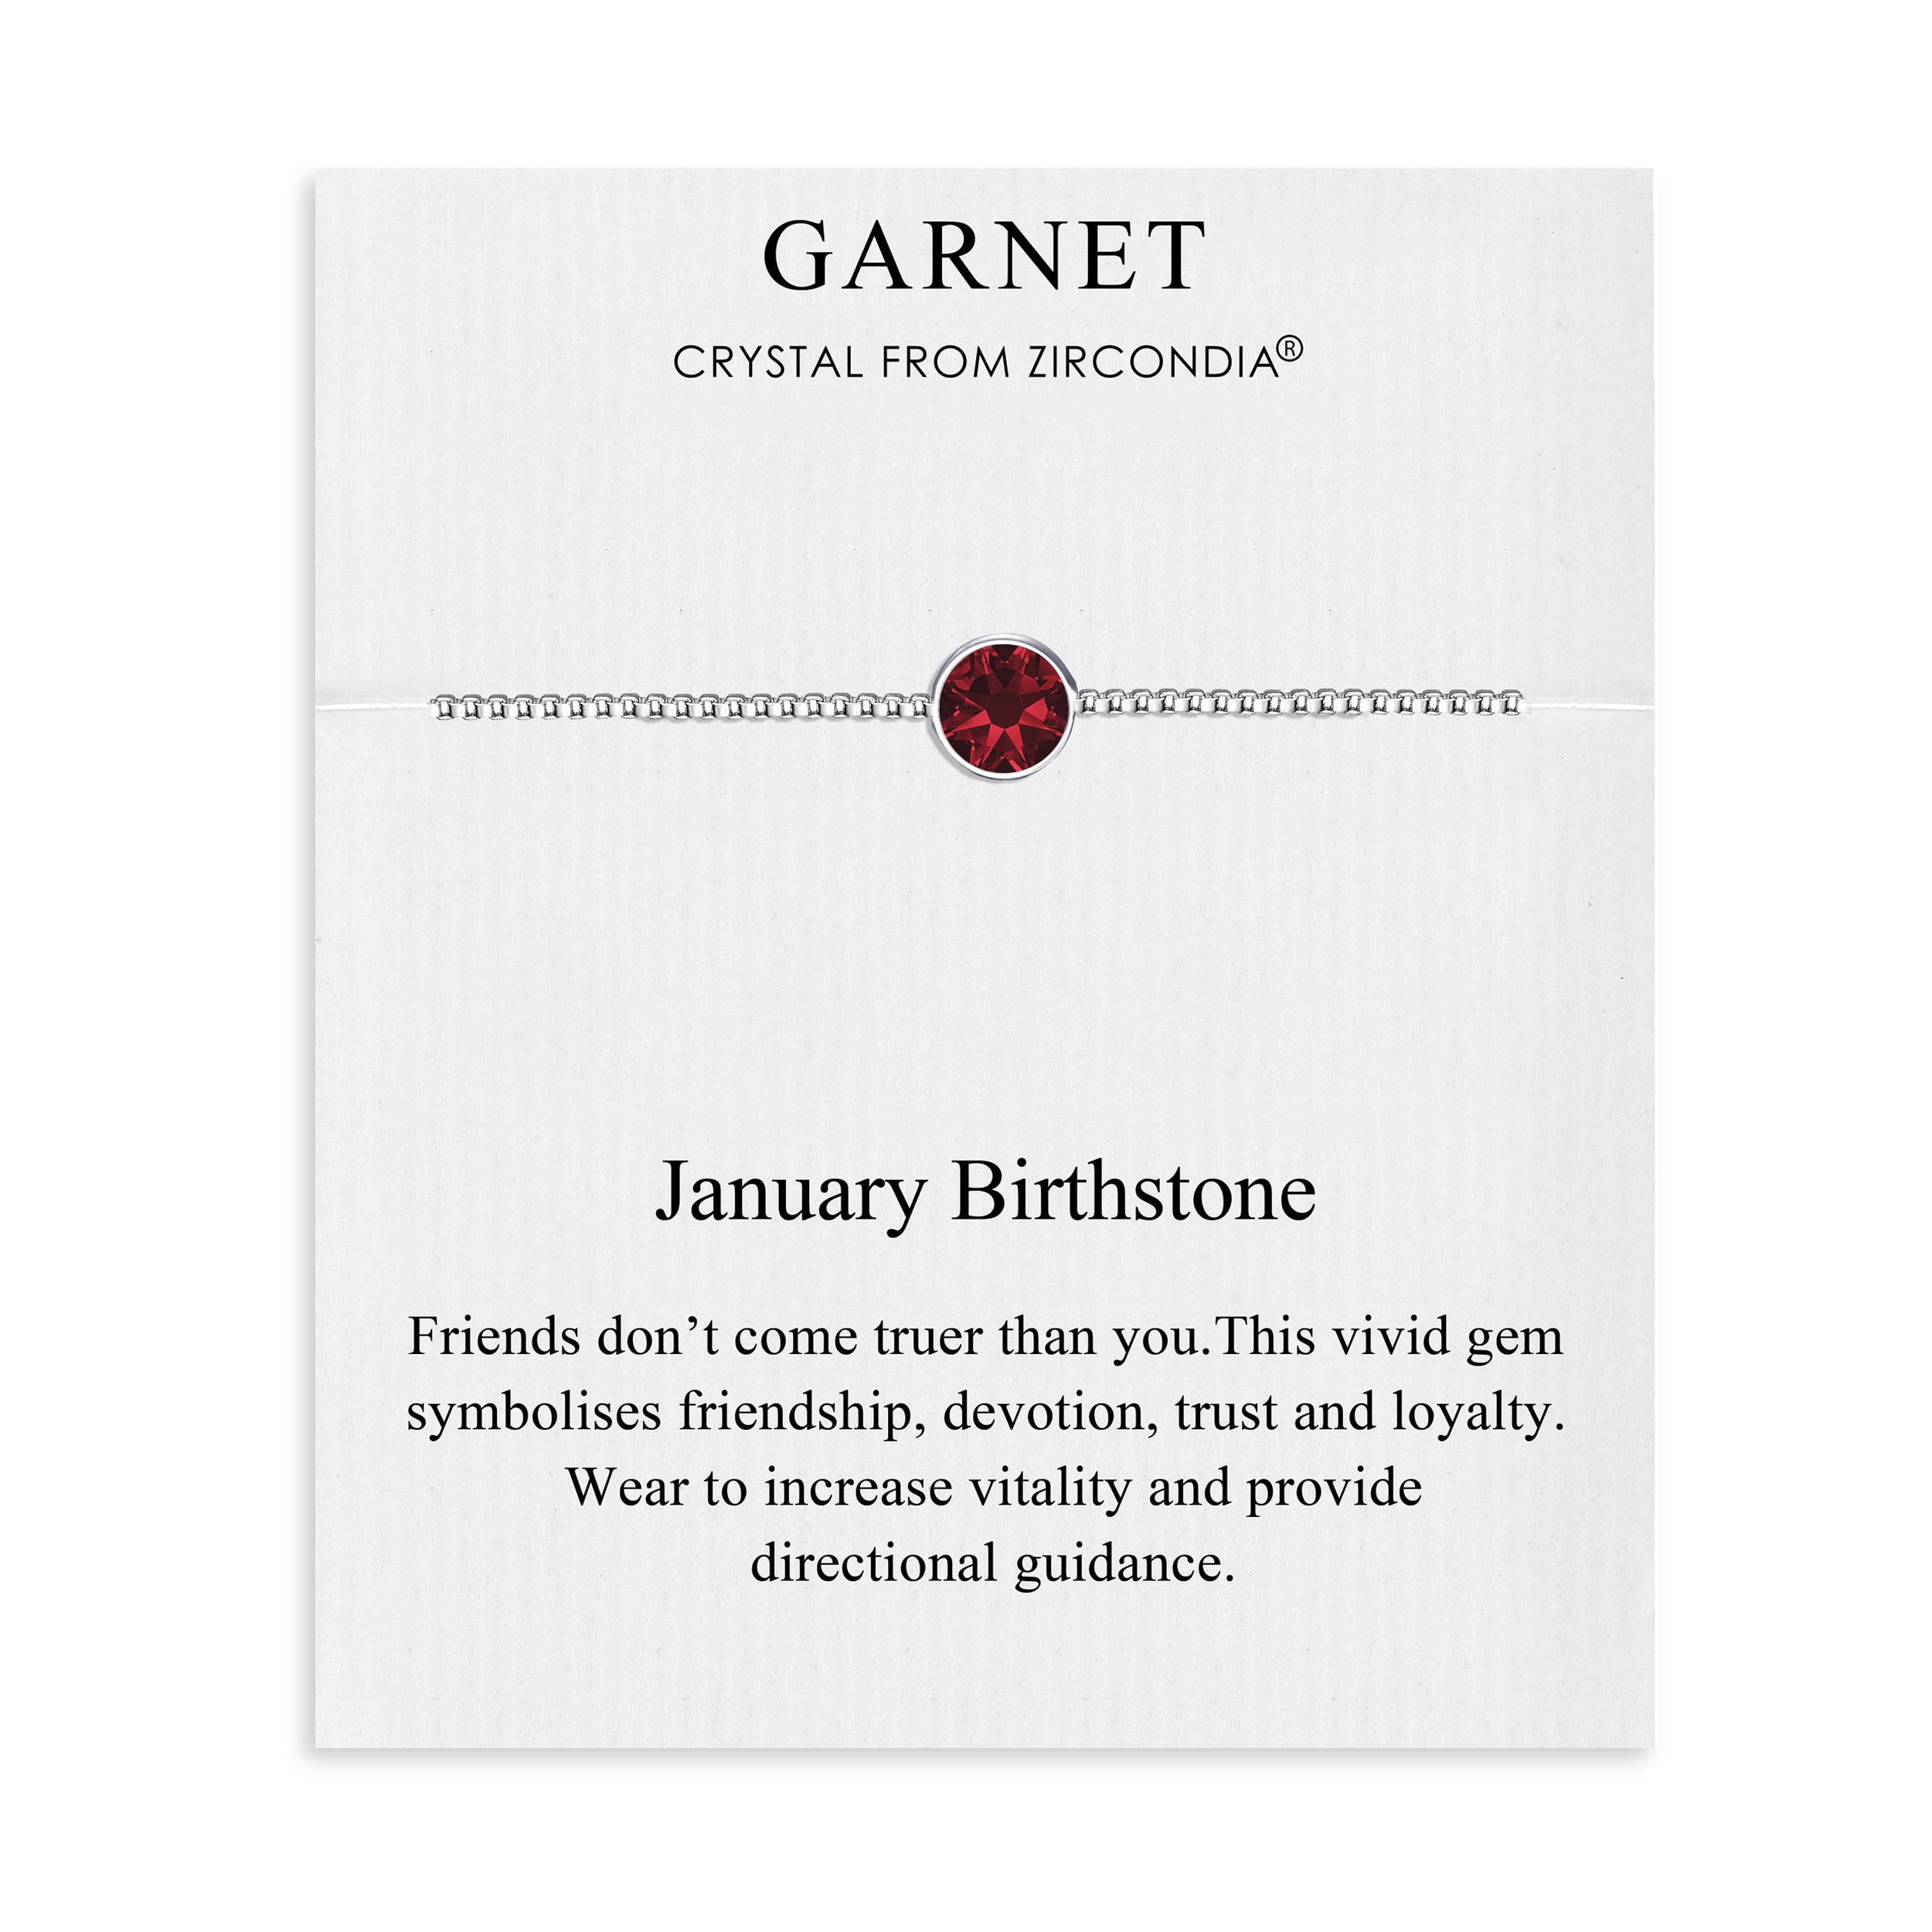 January (Garnet) Birthstone Bracelet Created with Zircondia® Crystals by Philip Jones Jewellery